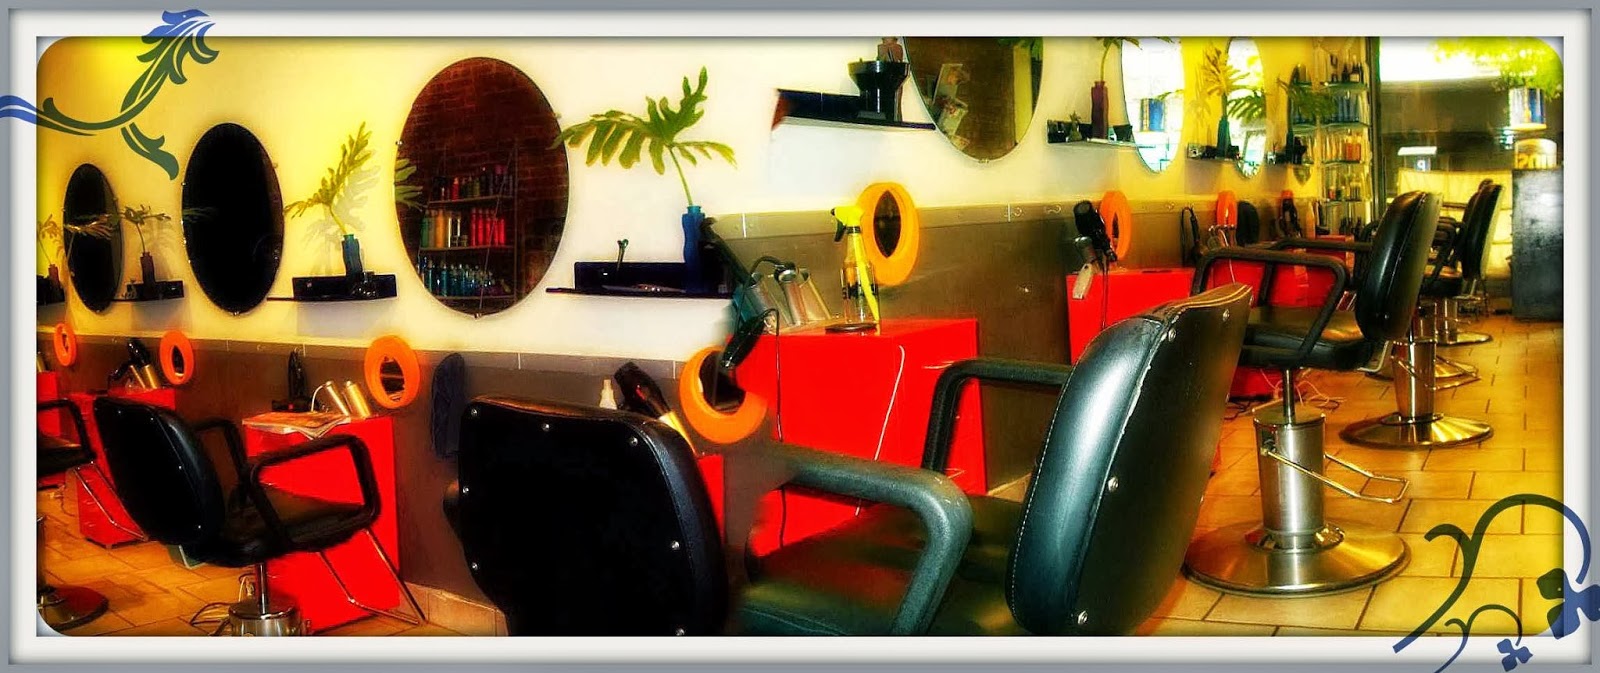 Photo of Emilio Antonio Hair Studio in New York City, New York, United States - 1 Picture of Point of interest, Establishment, Beauty salon, Hair care